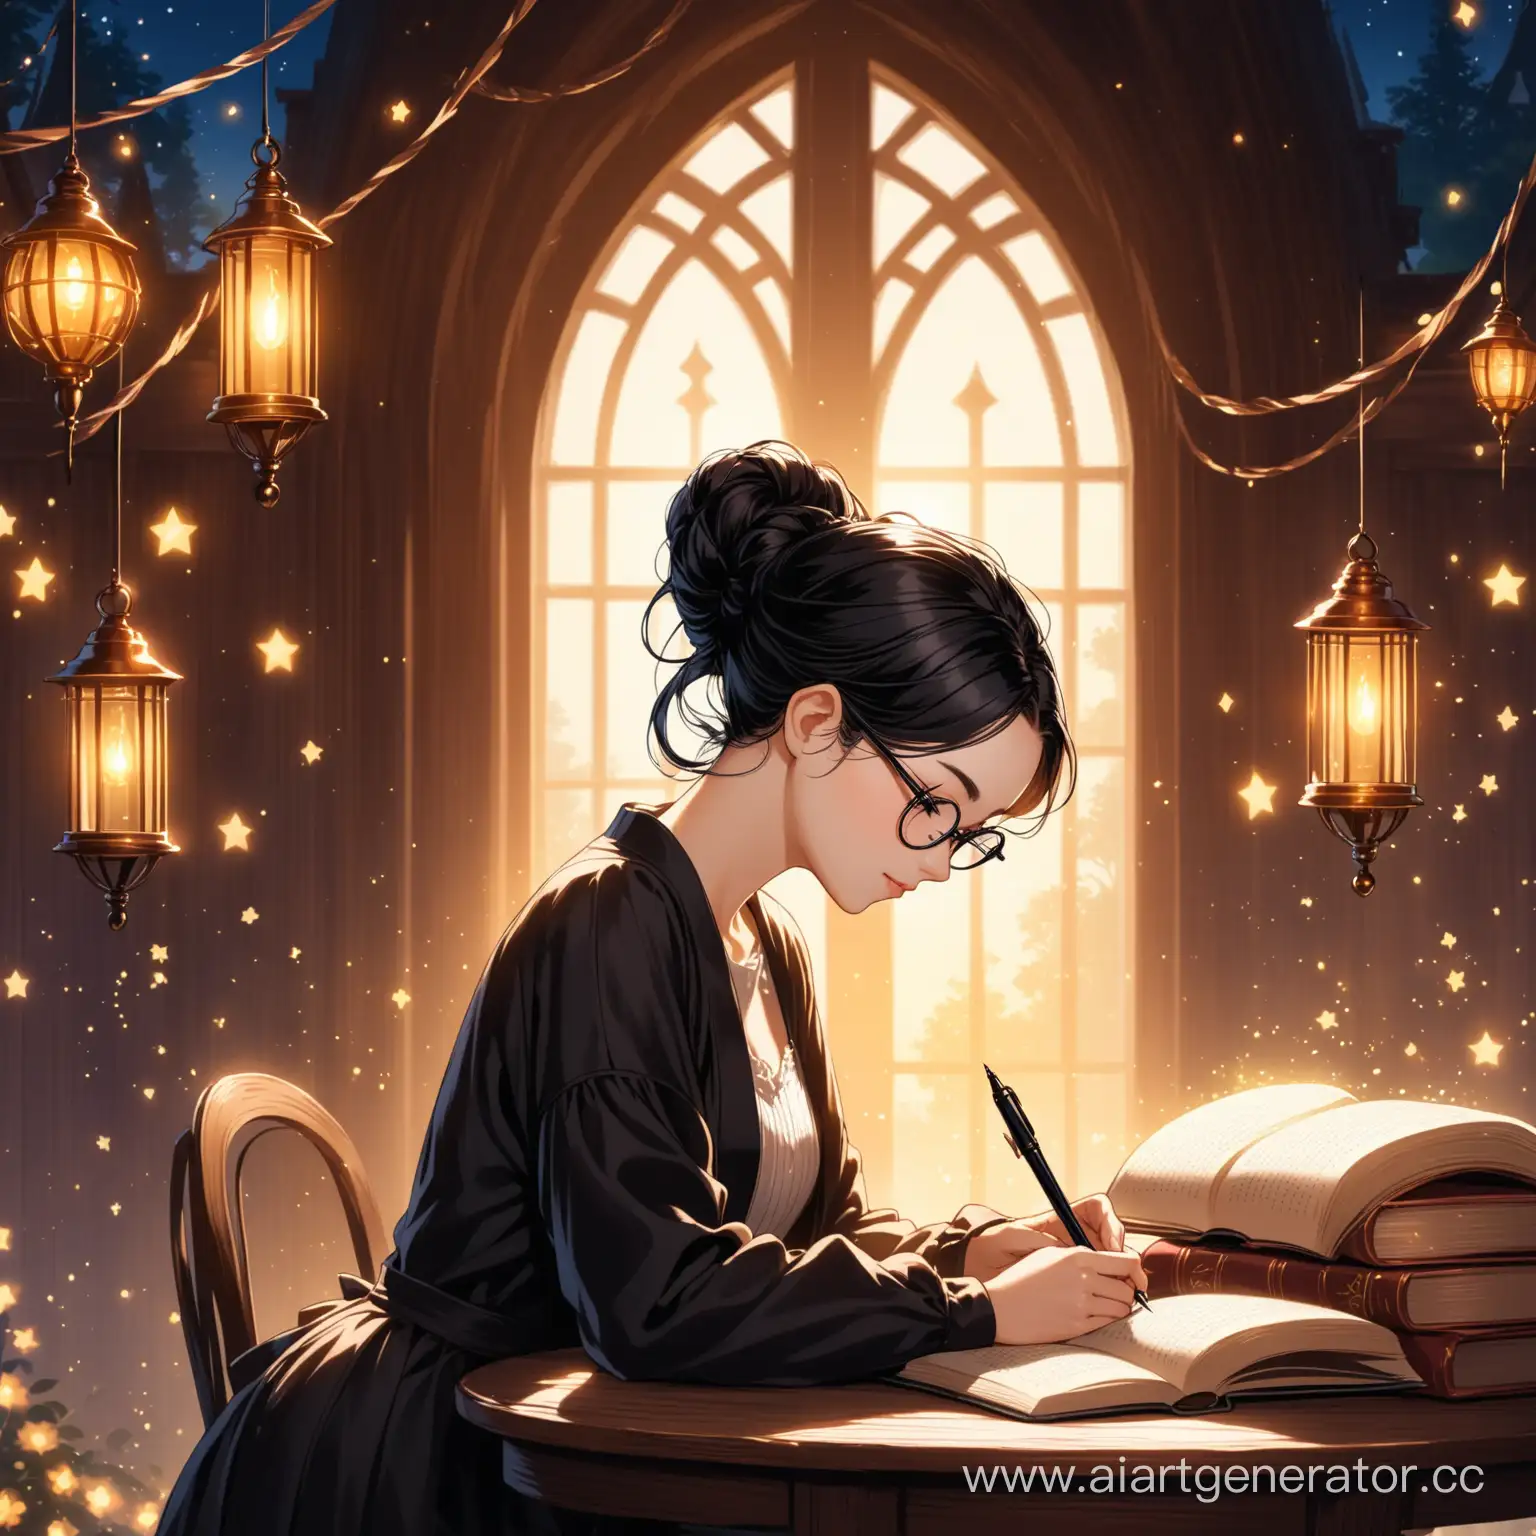 Magical-Girl-Writing-in-Enchanted-Setting